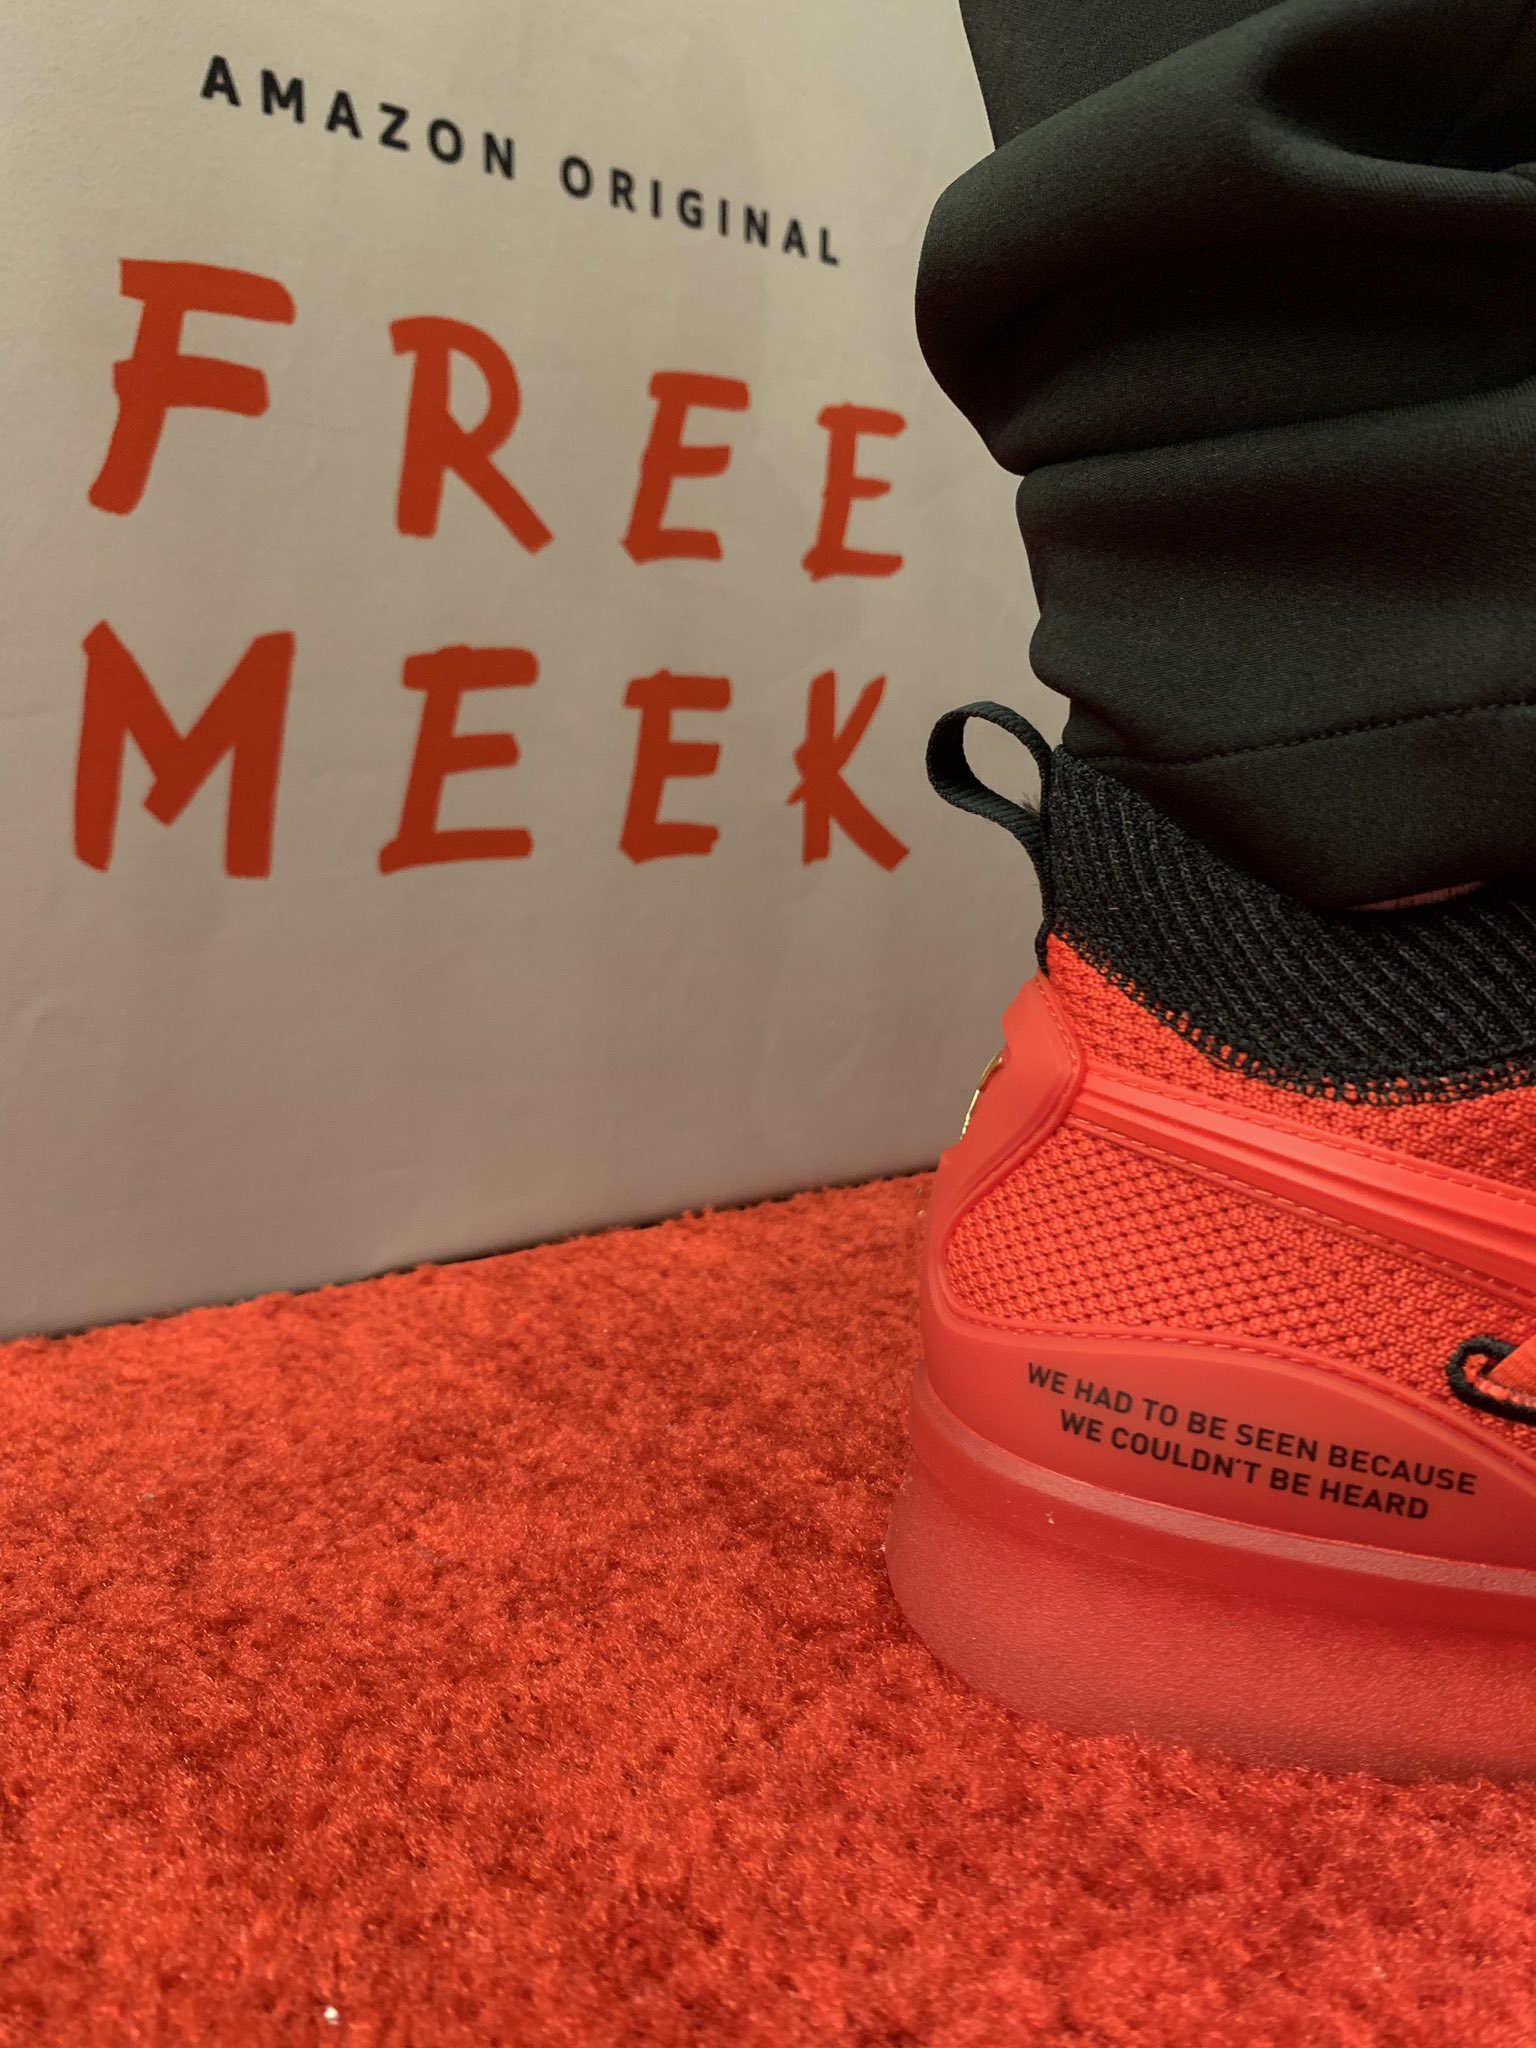 meek mill prison reform shoes